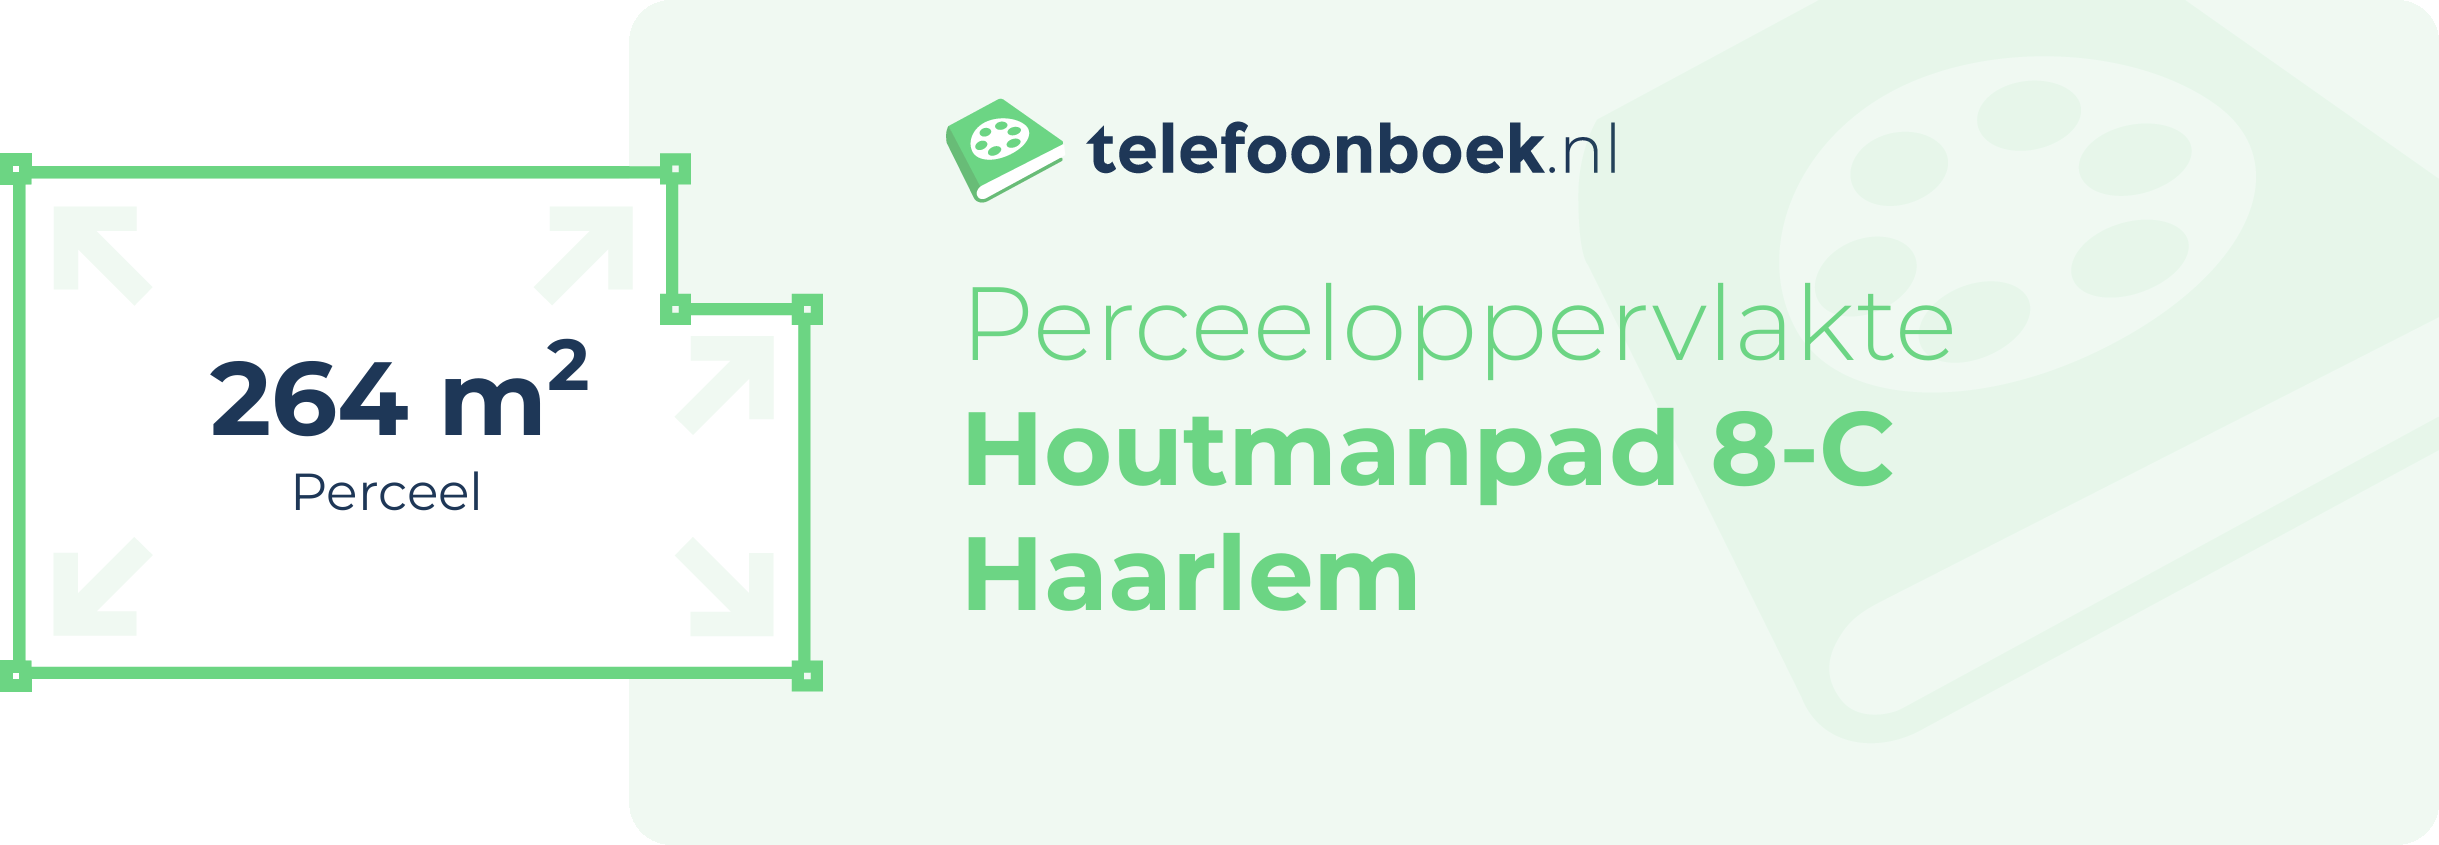 Perceeloppervlakte Houtmanpad 8-C Haarlem